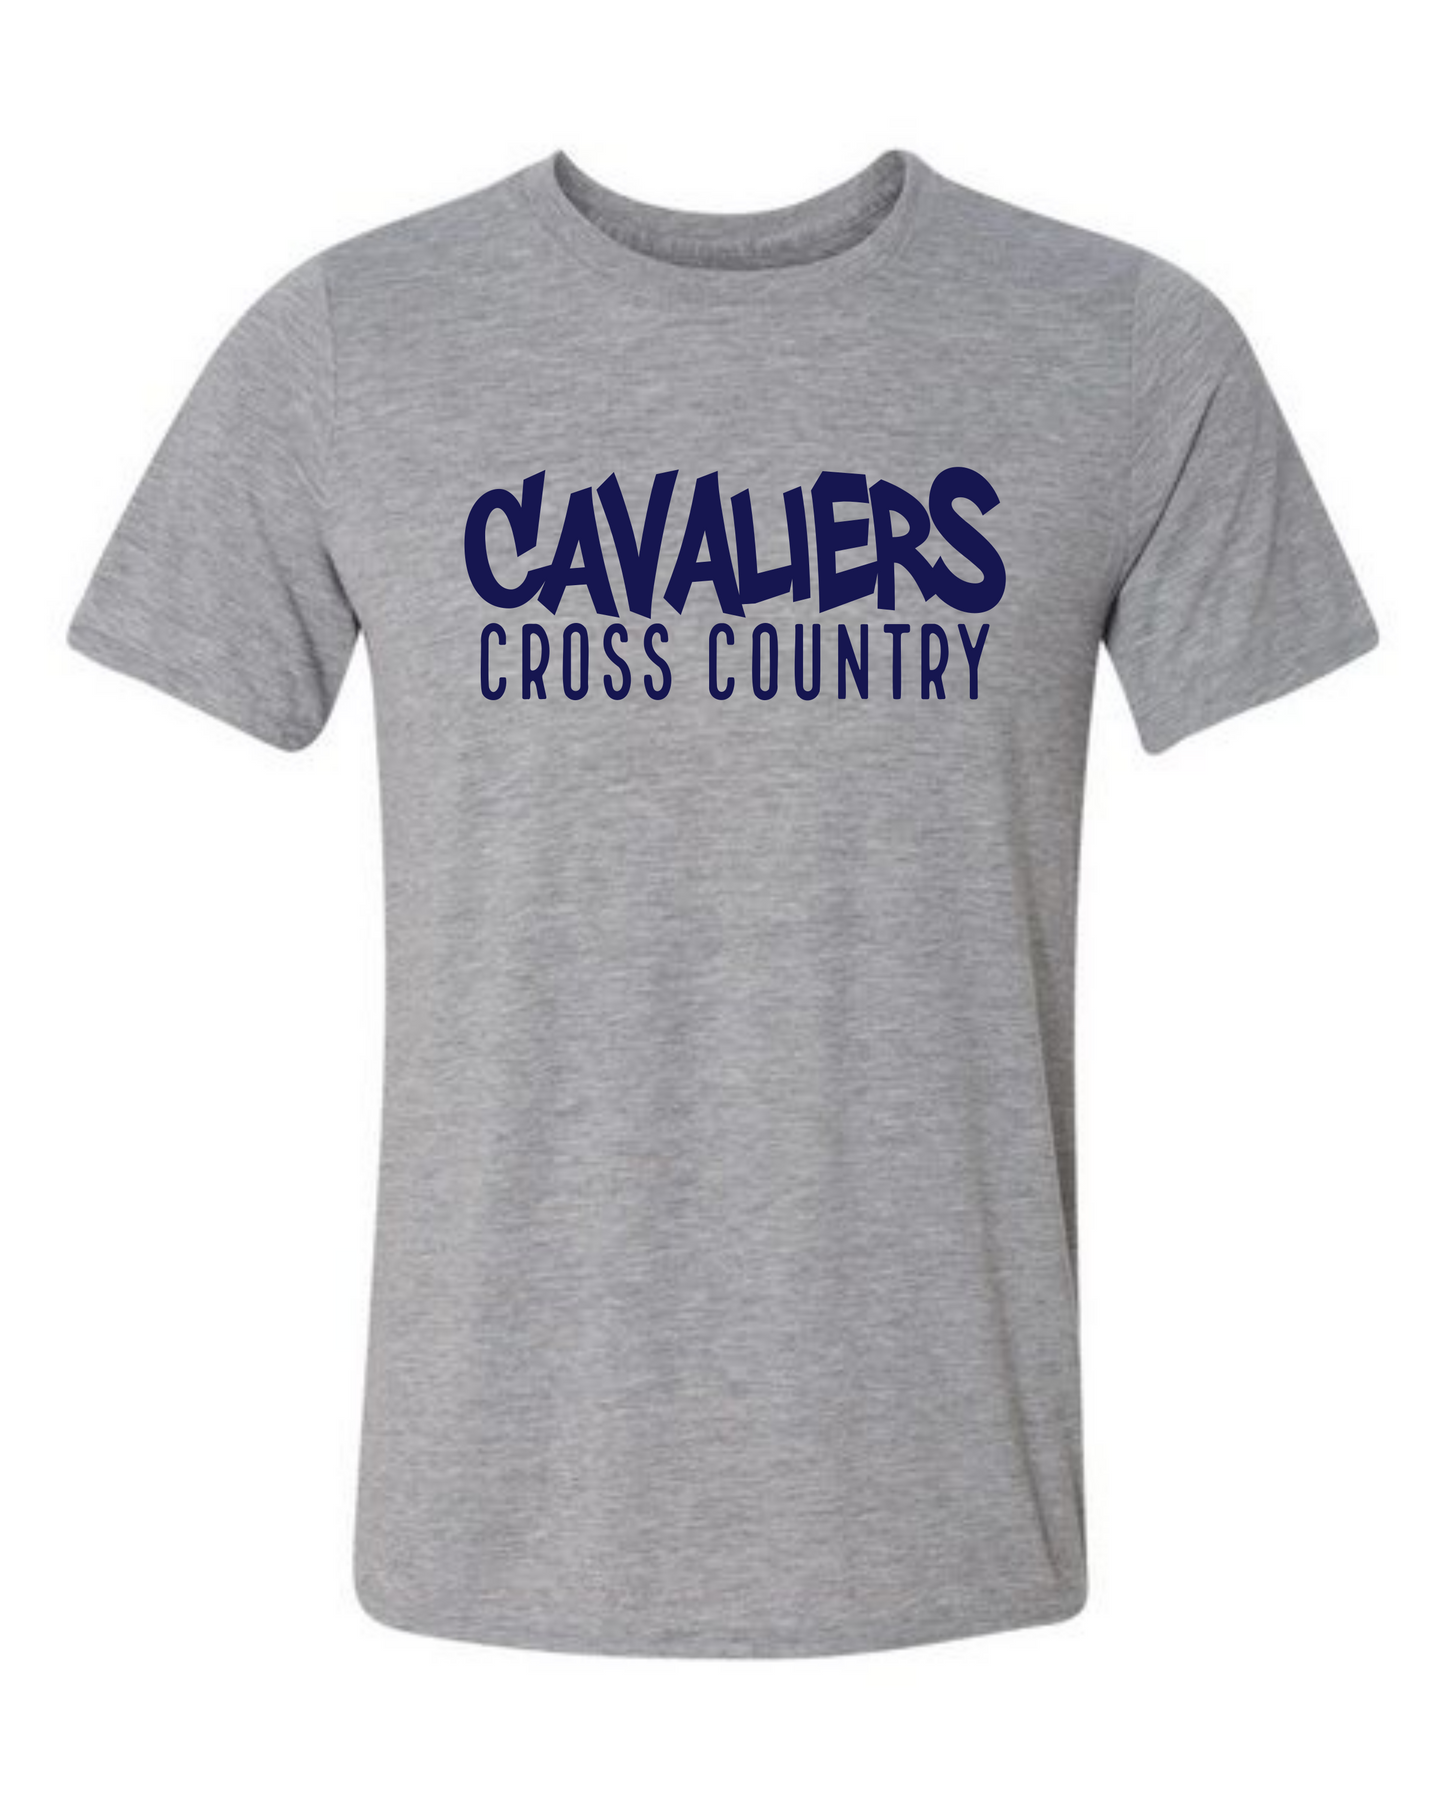 Cavaliers Cross Country Tshirt